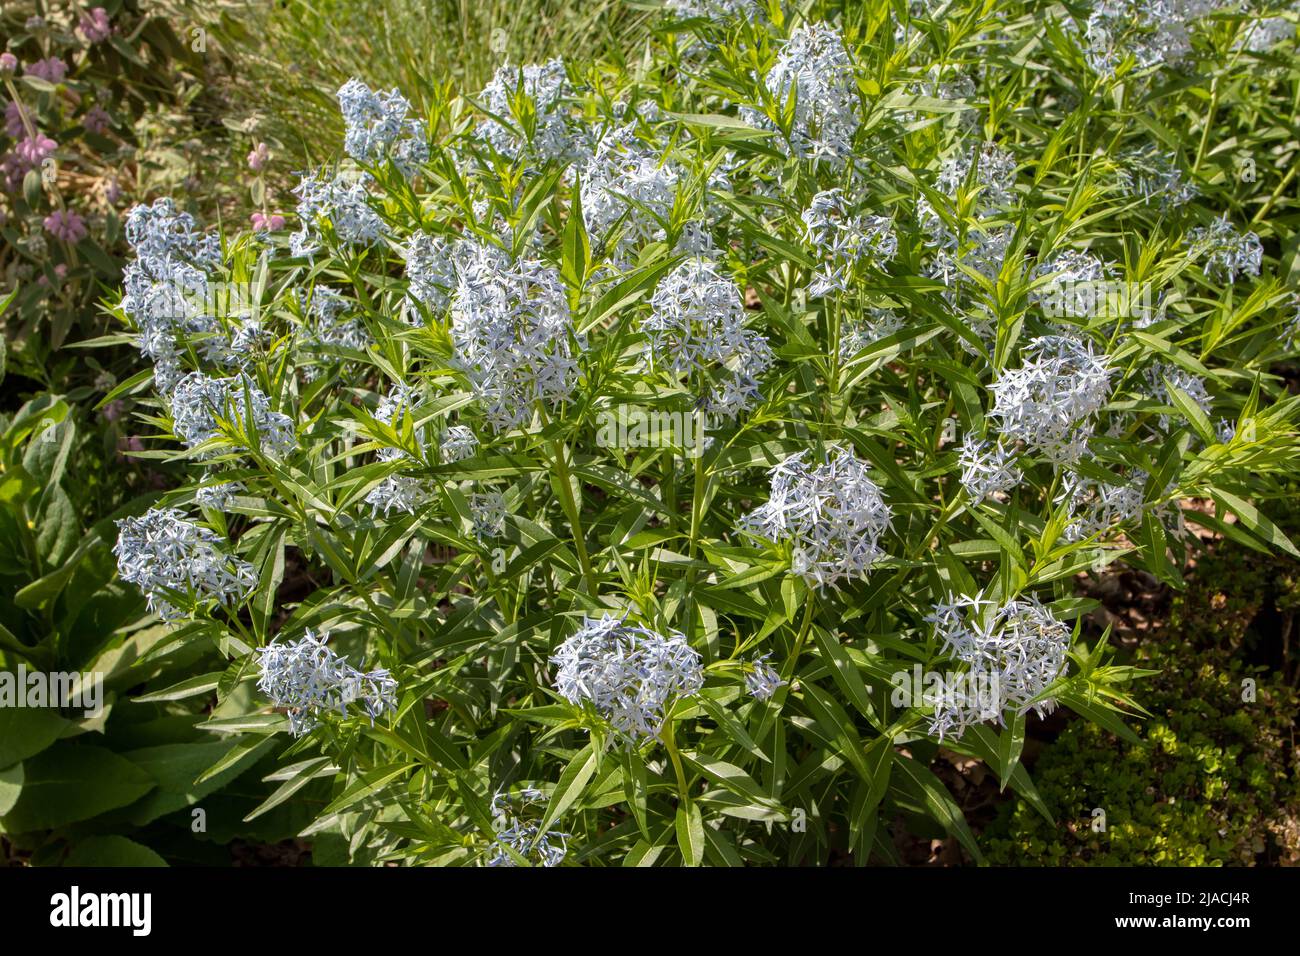 Planta de Amsonia tabernaemontana o estrella azul o estrella azul oriental con flores en forma de estrella azul pálido Foto de stock